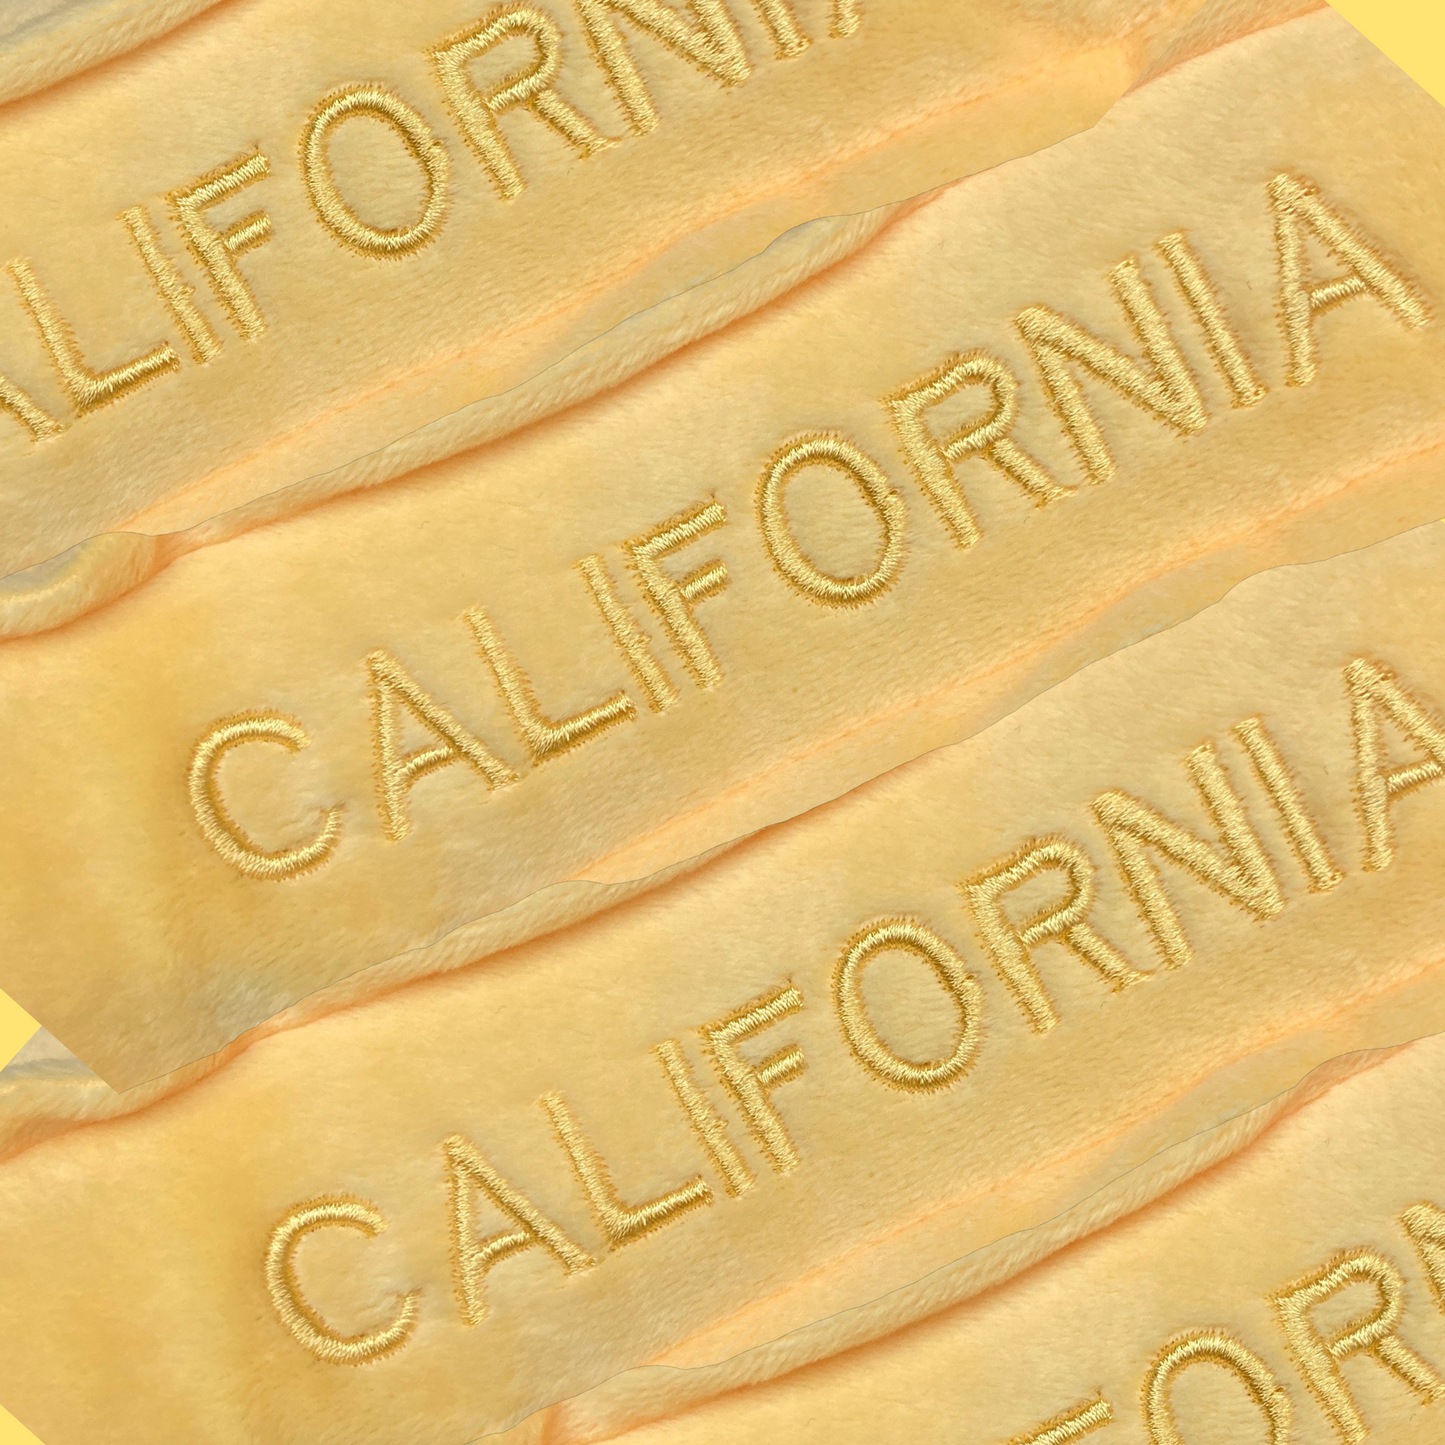 California State Stuffed Plush